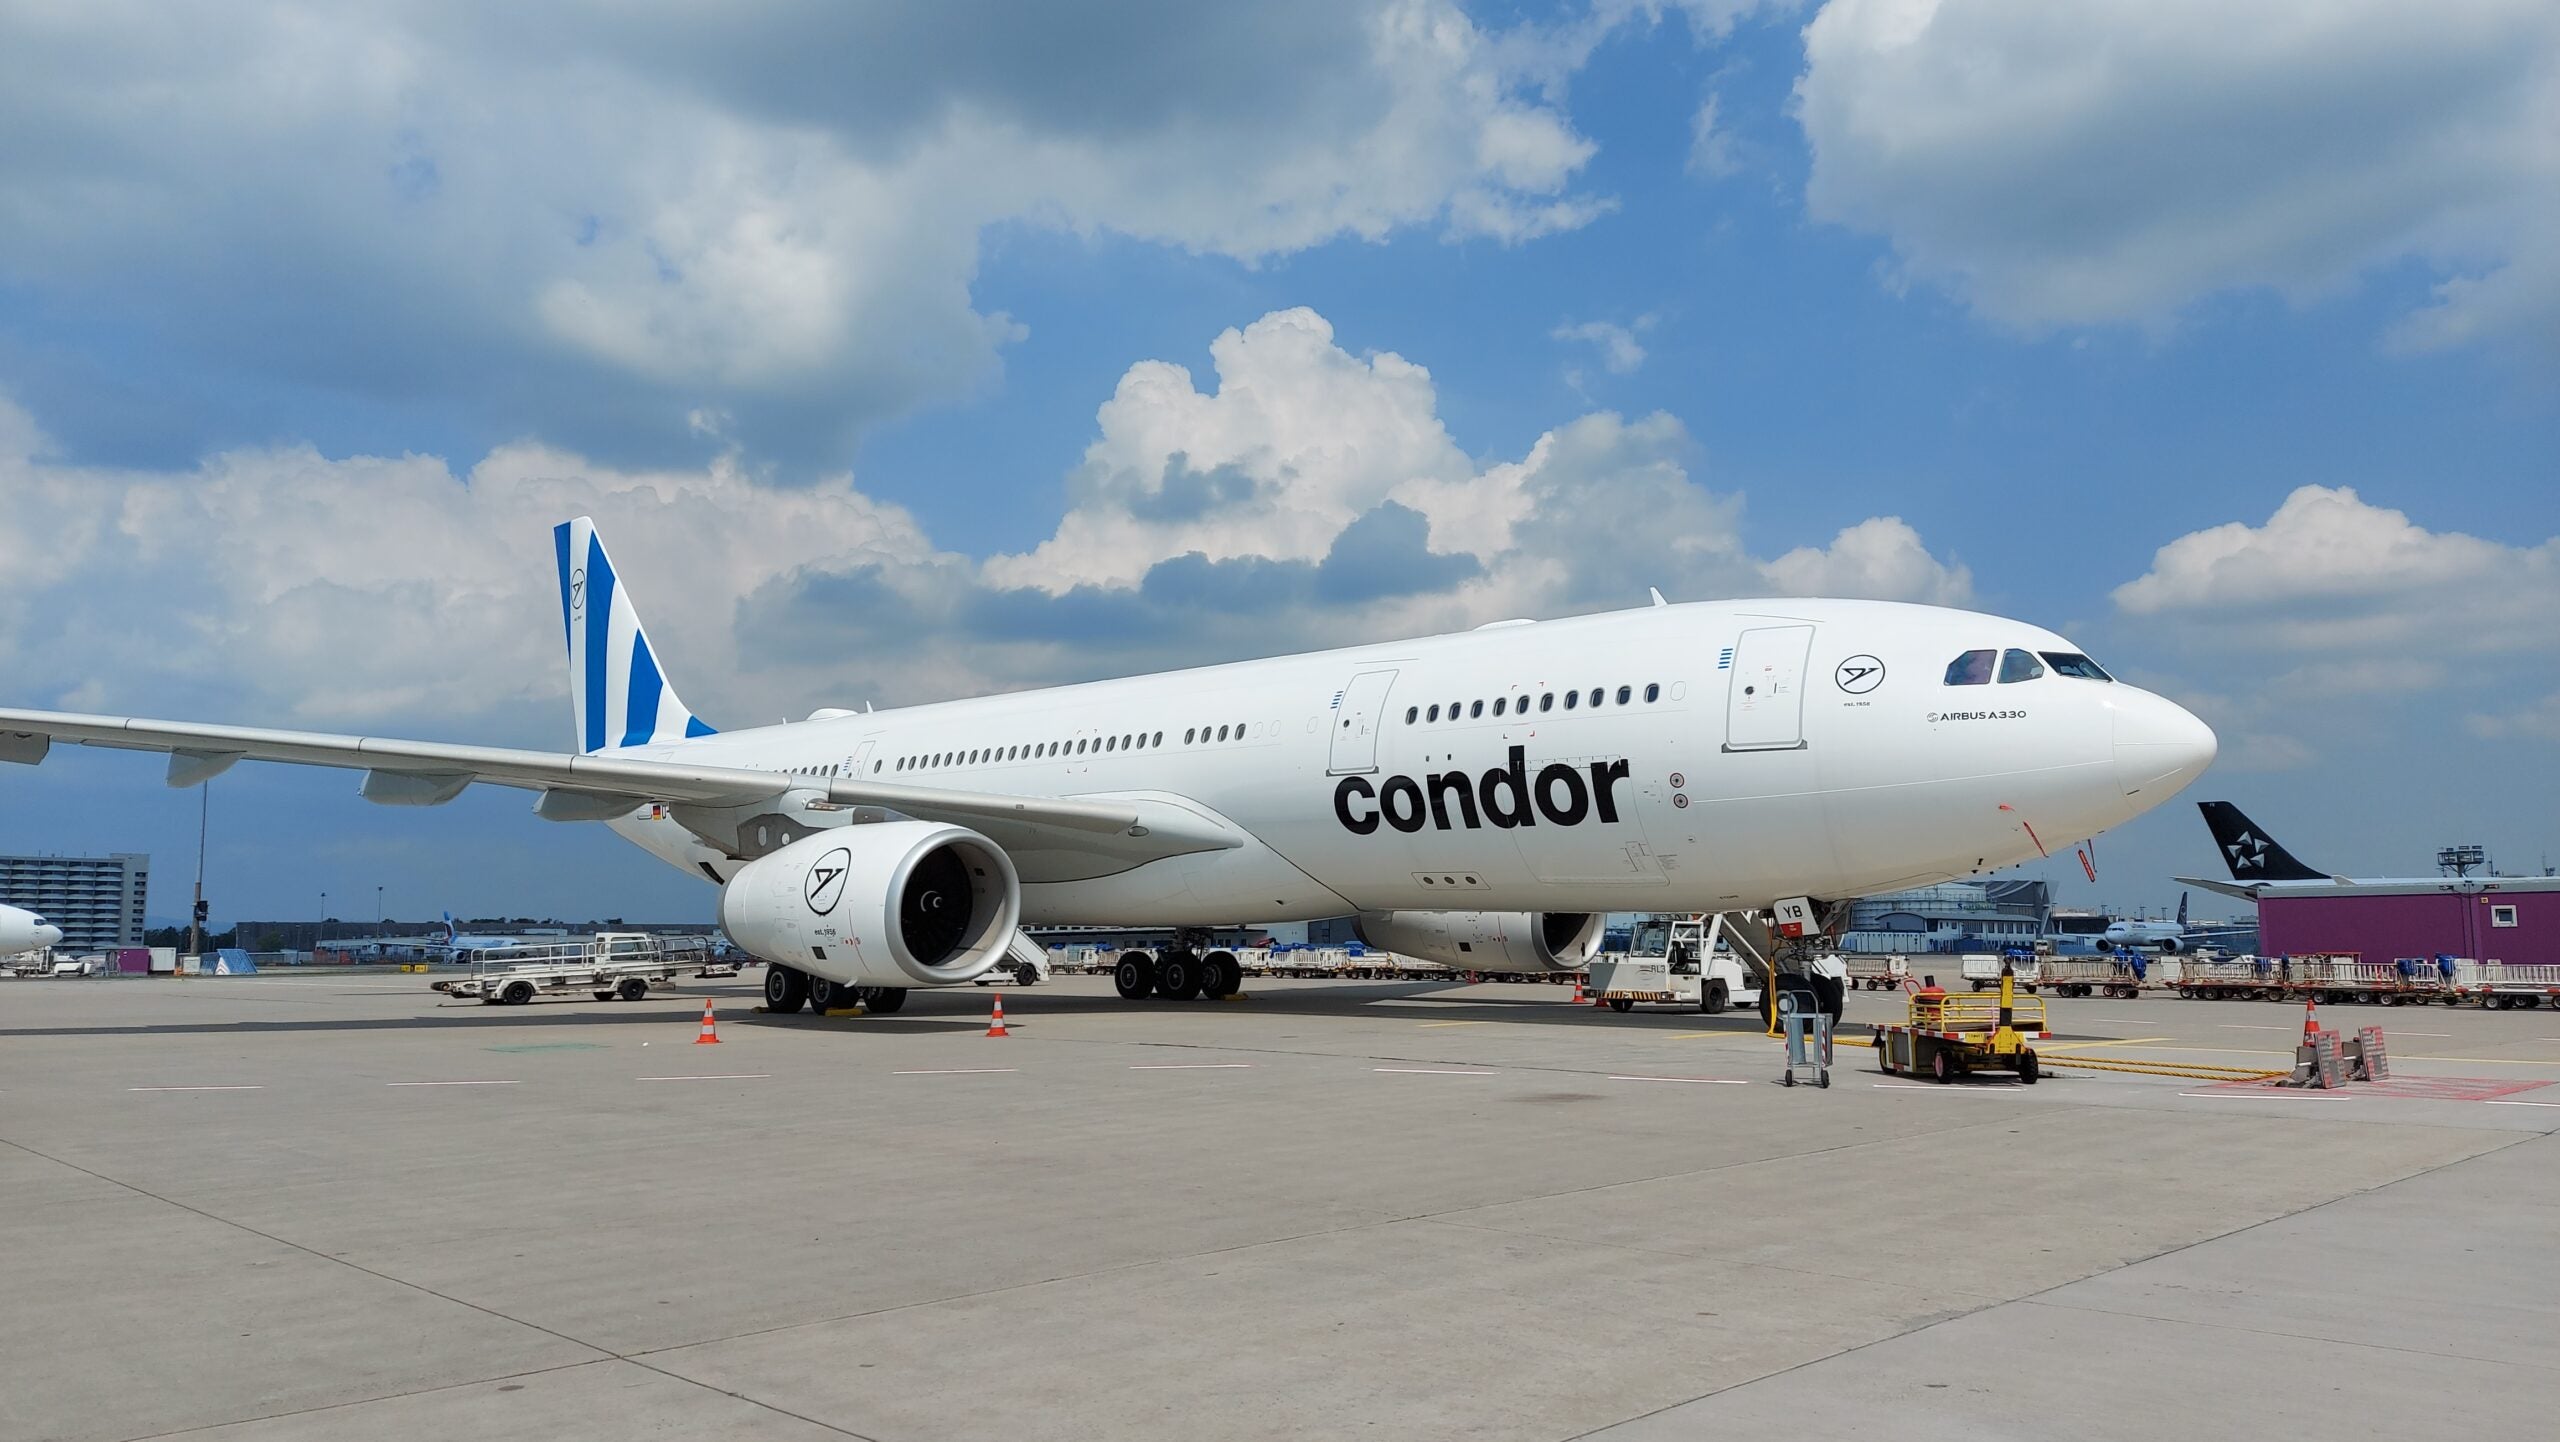 Condor Airlines begins service at Logan Airport